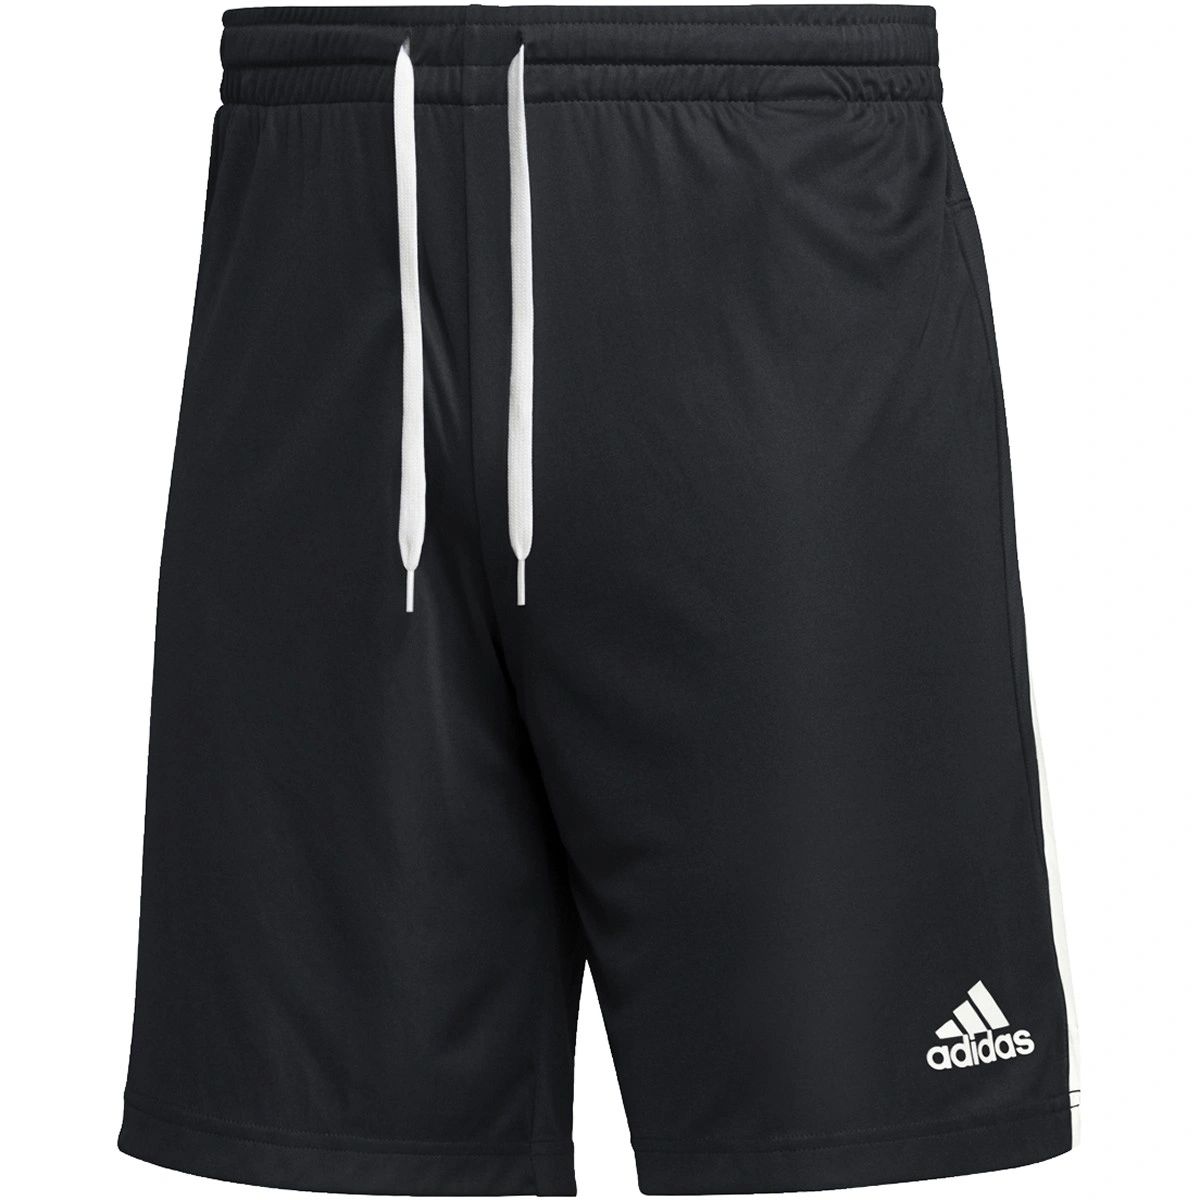 Adidas Team Issue Knit Shorts